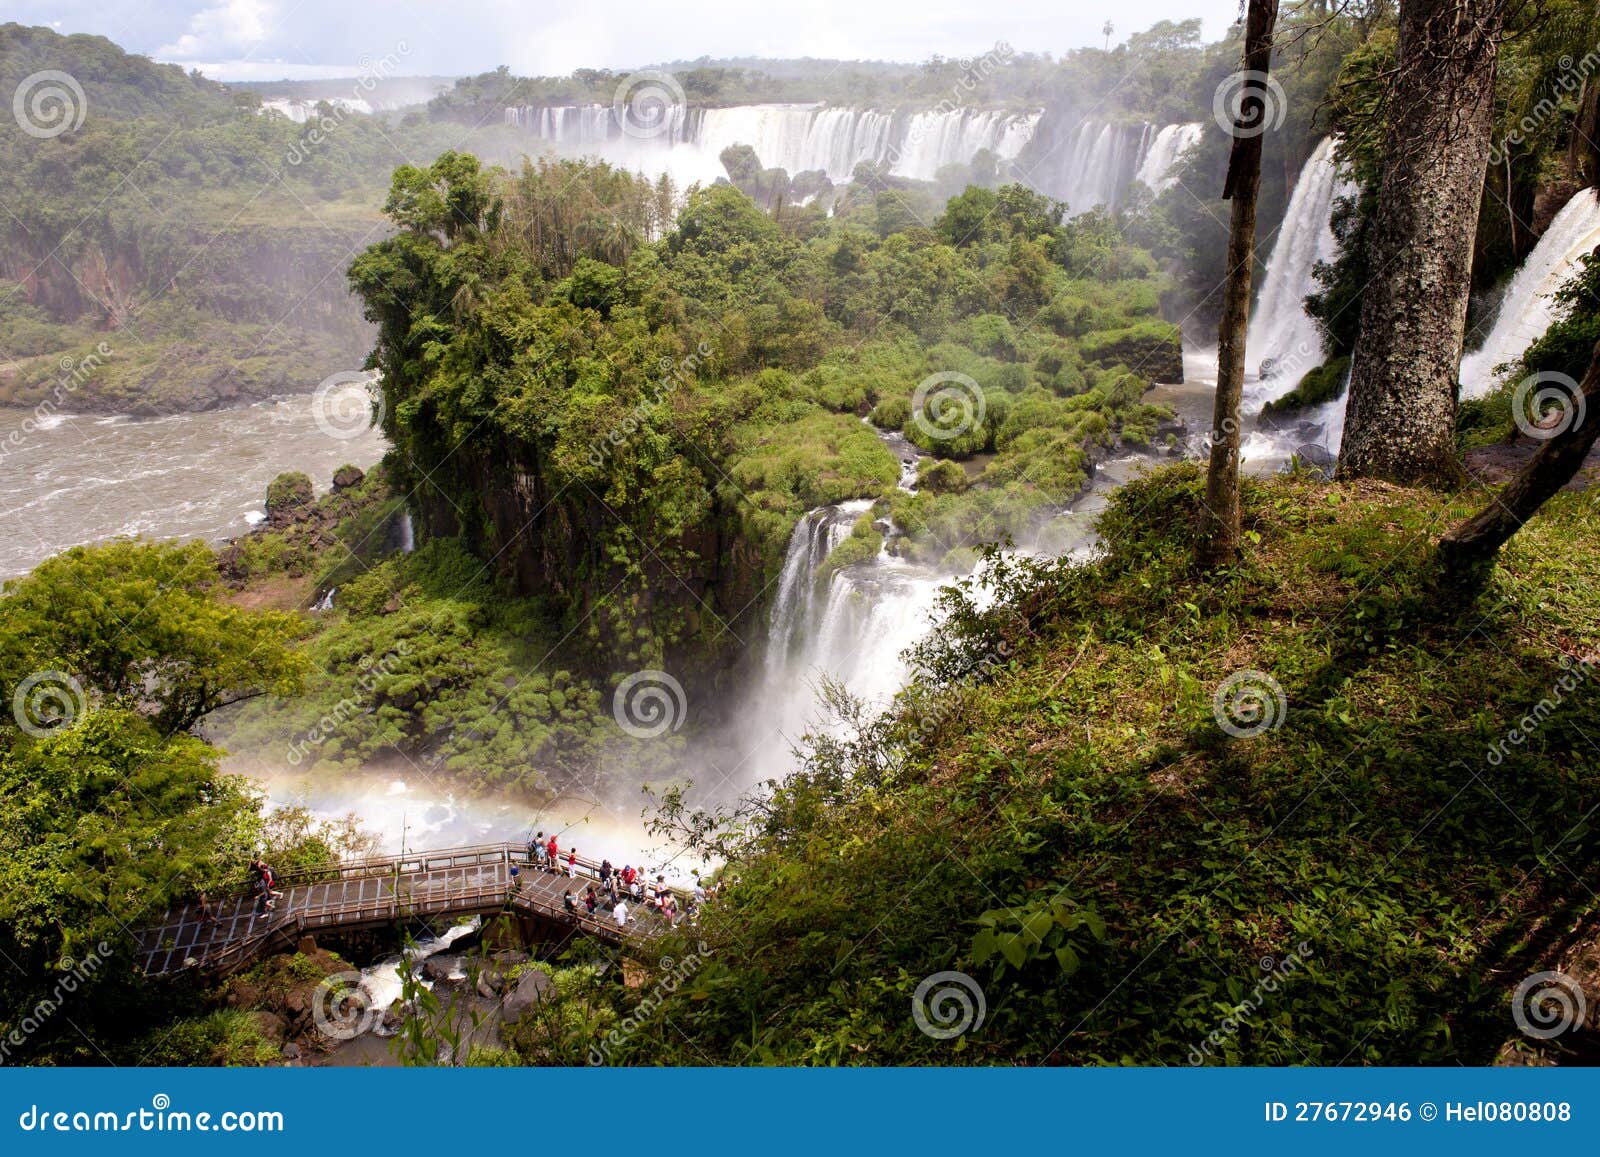 iguazu falls, argentina